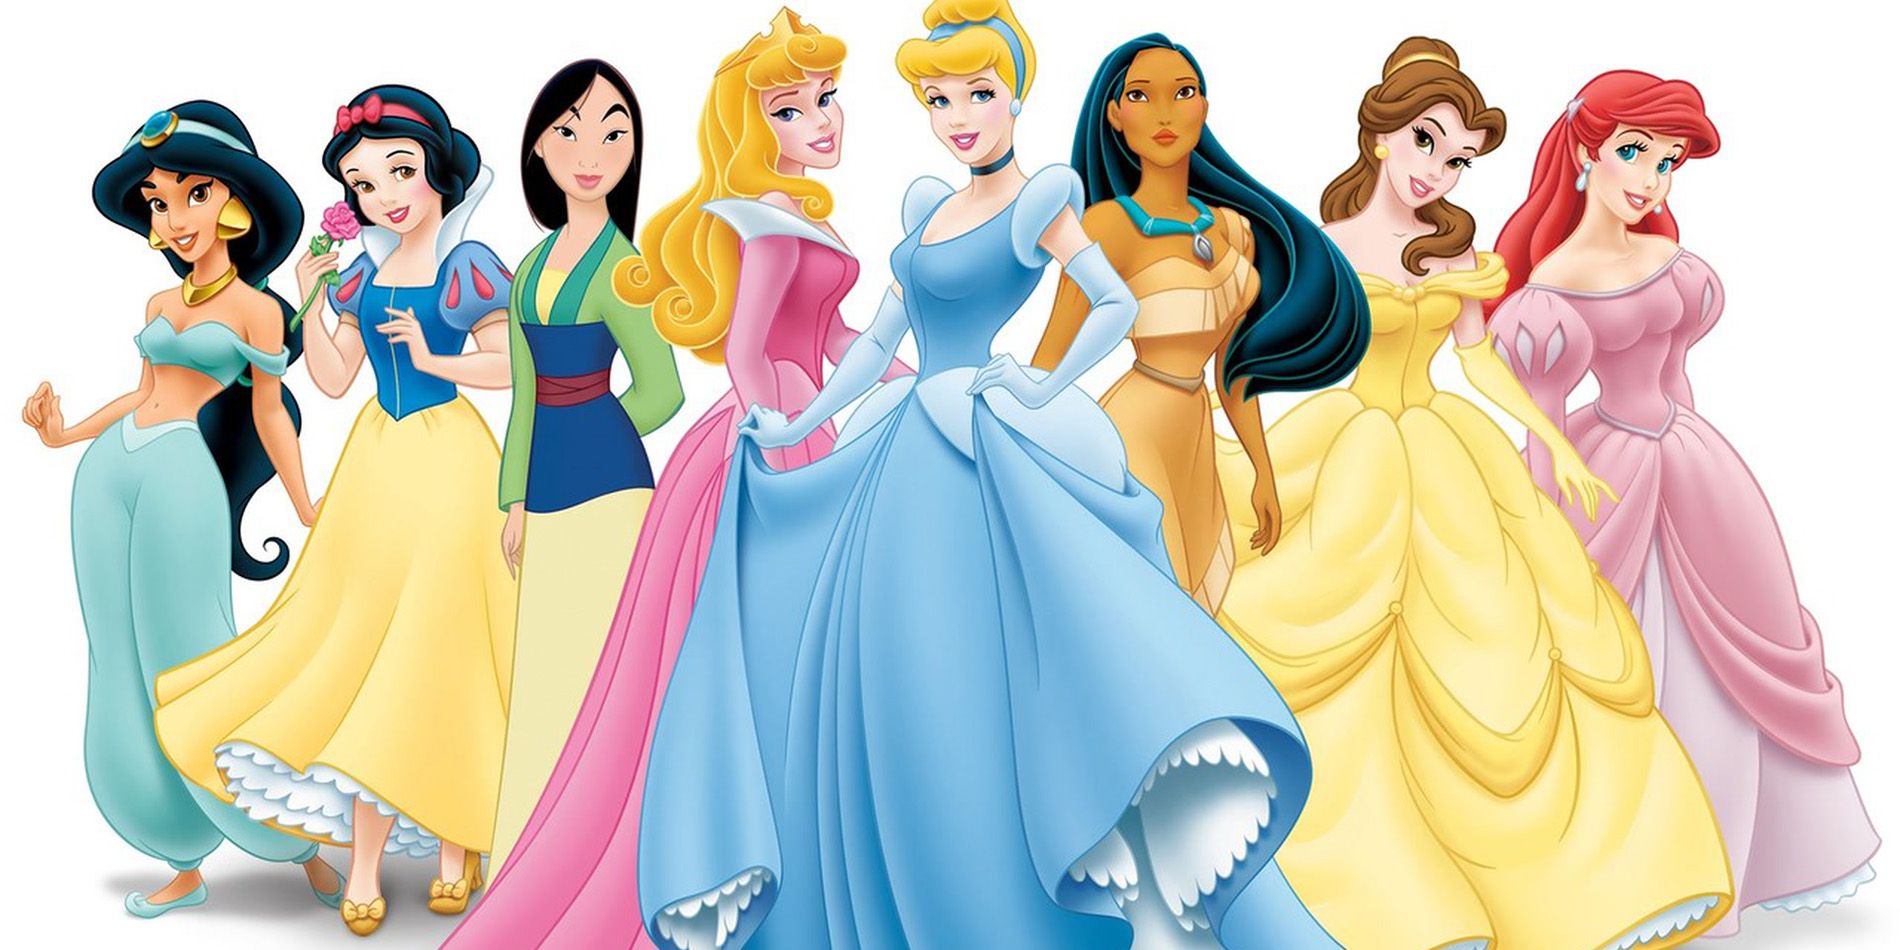 Jasmine, Snow White, Mulan, Sleeping Beauty, Cinderella, Pocohantas, Belle, and Ariel in dresses